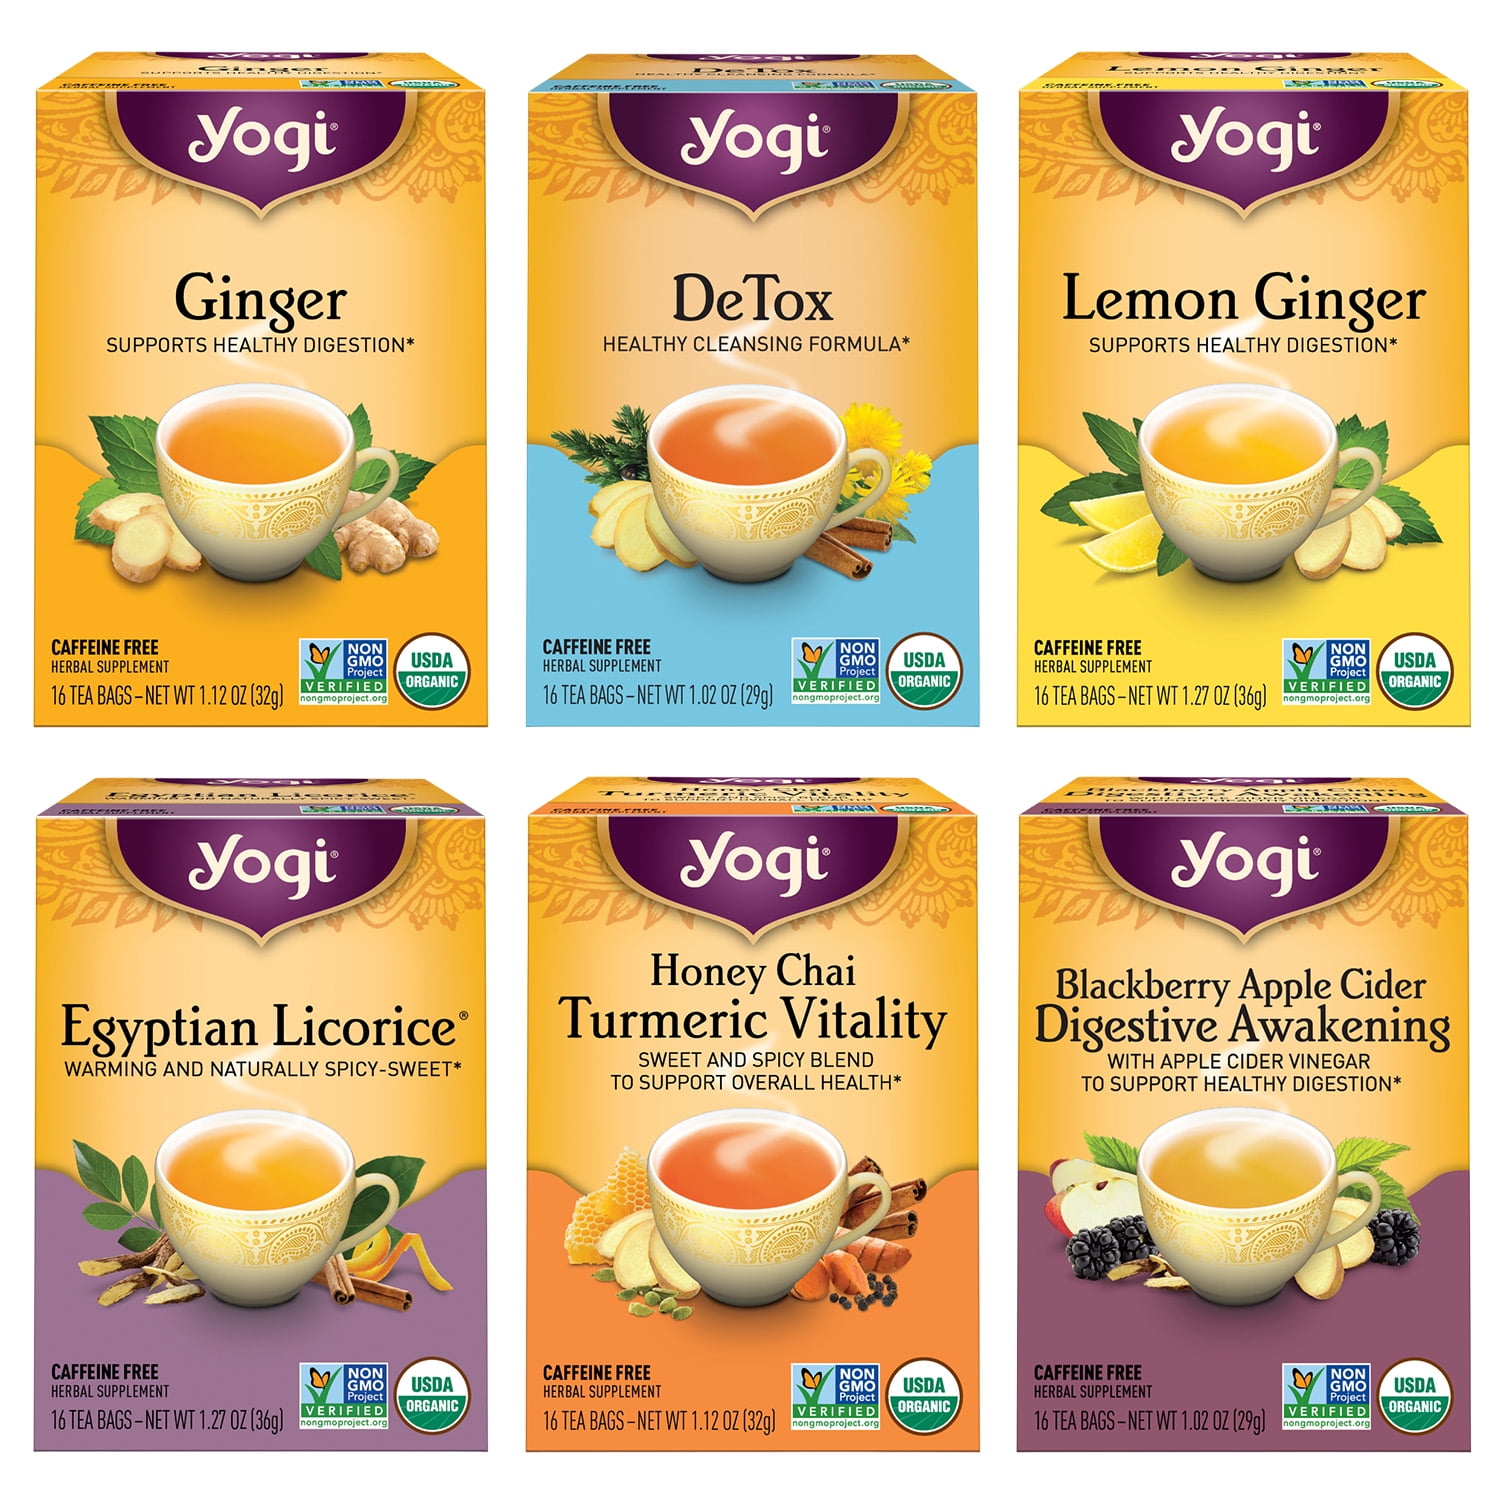 Yogi Tea Detox Caffeine Free 1.02 oz – California Ranch Market